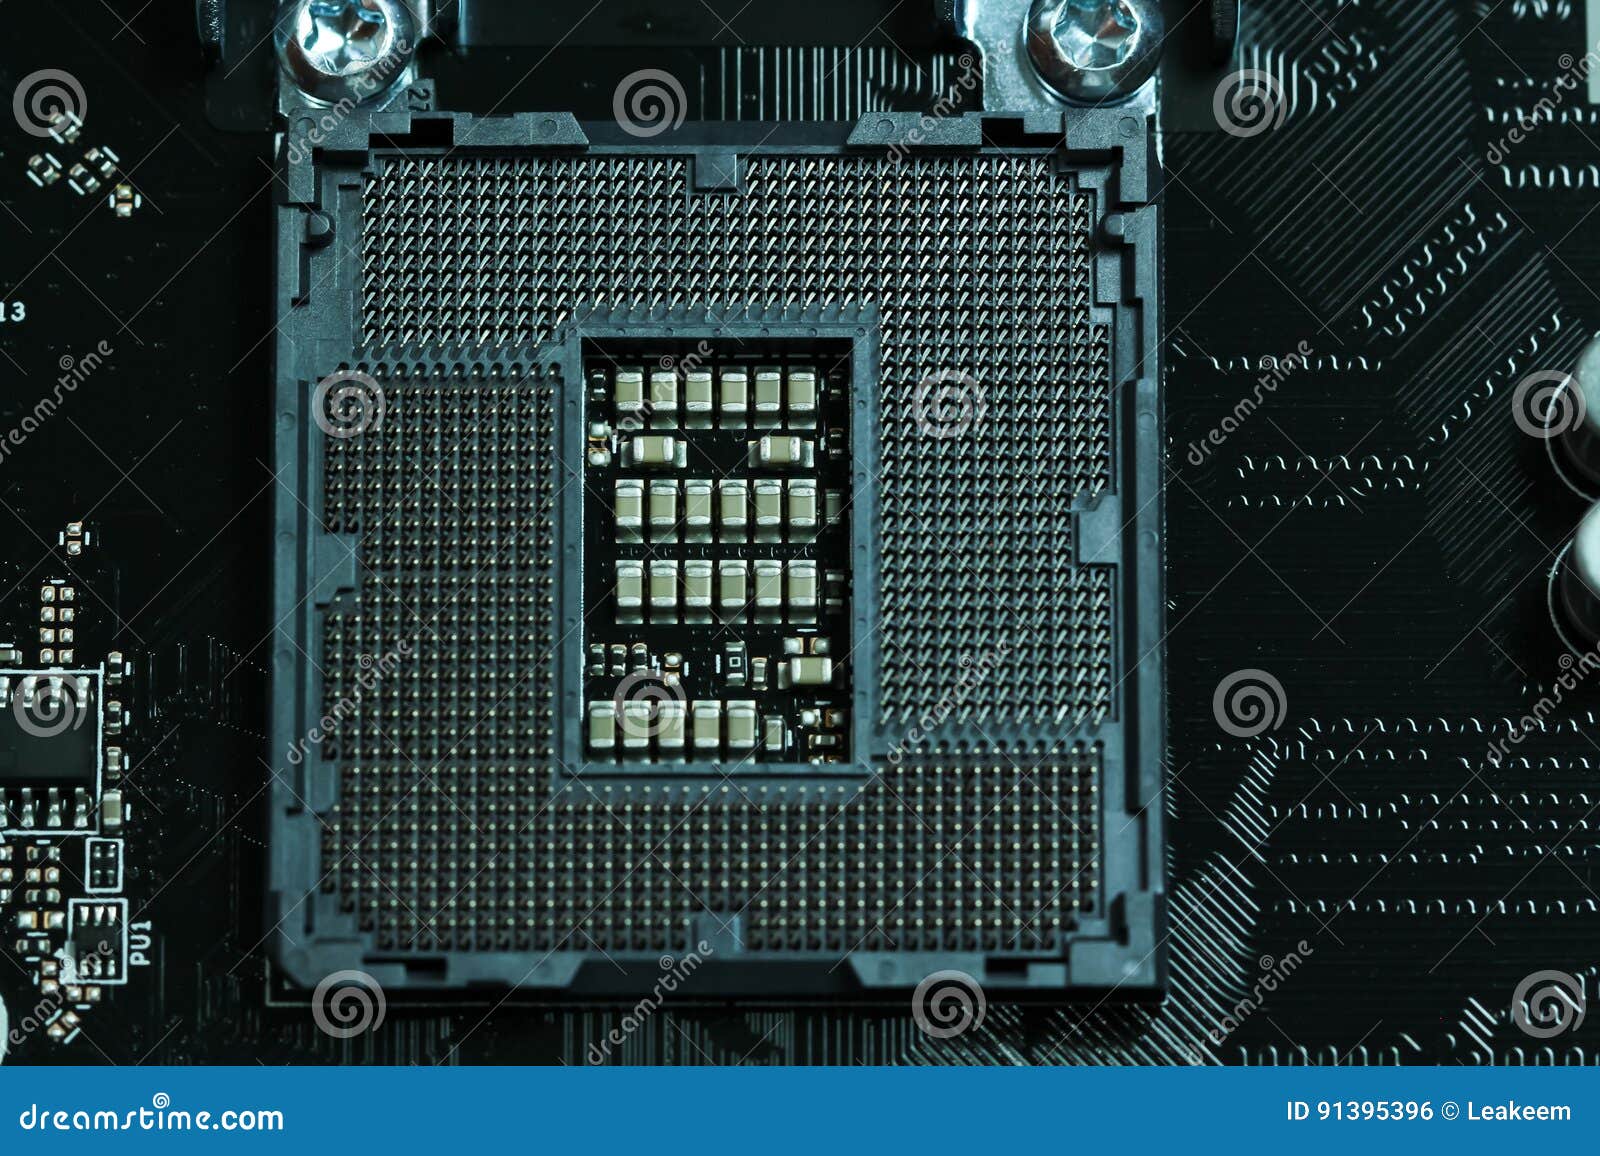 I7 сокет 1151. LGA 1151 сокет. 1151 Dual Socket lga1151 Intel материнская плата. Motherboard LGA 1151 White. LGA 1151 проставка процессора.